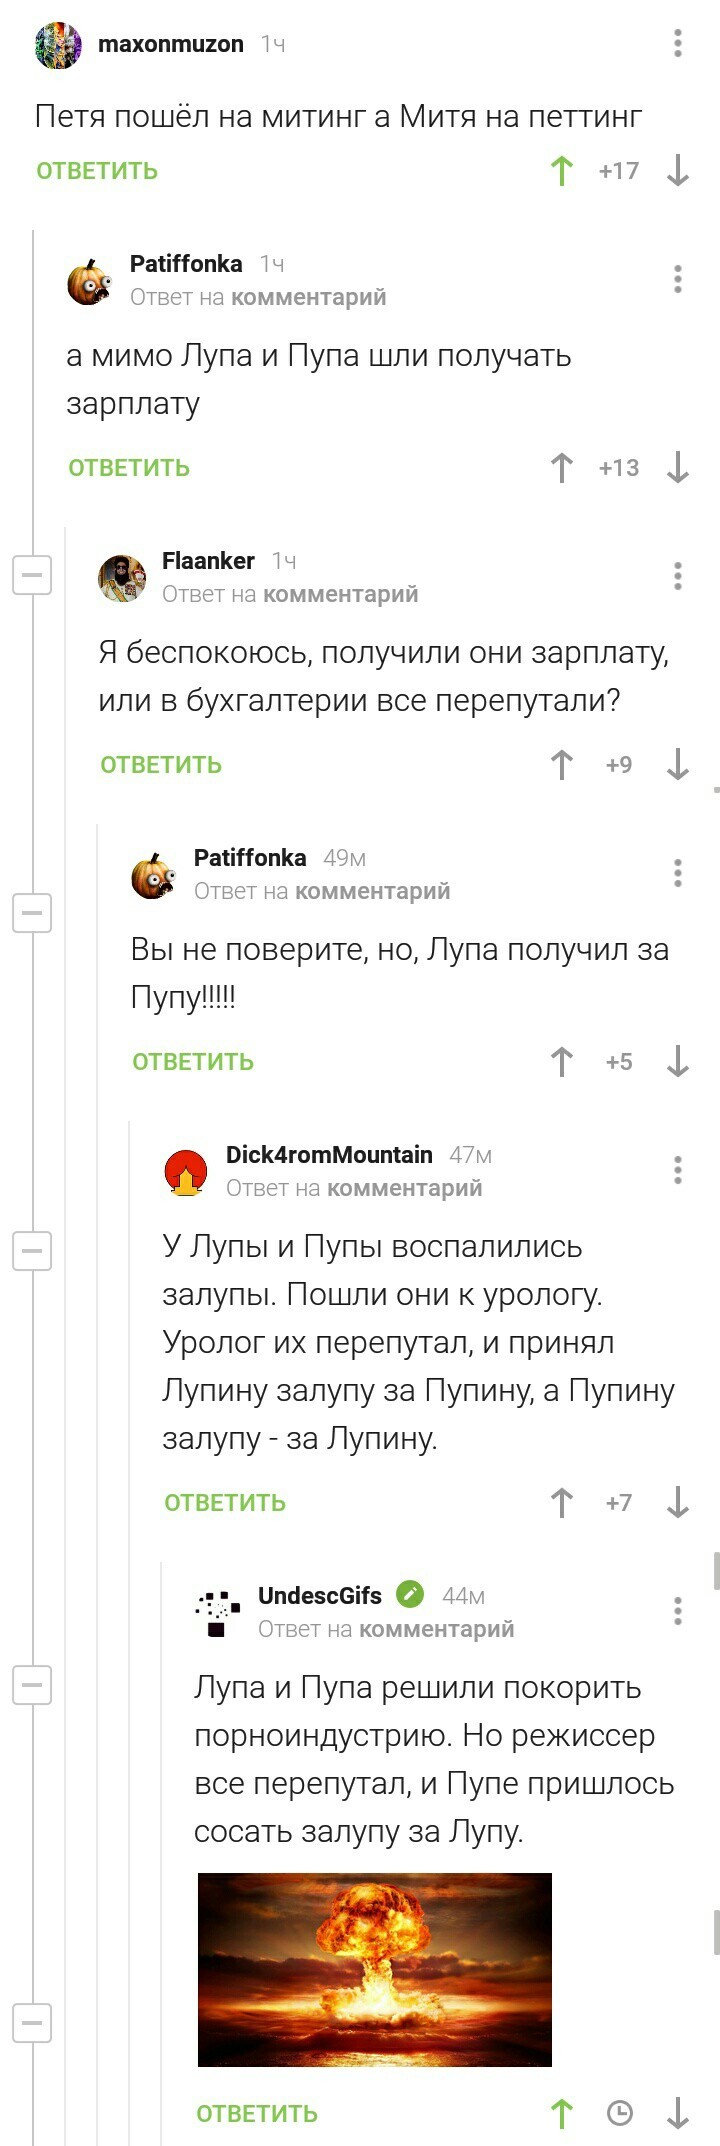 Petya and Mitya, Lupa and Pupa - Screenshot, Comments on Peekaboo, Magnifier and navel, Longpost